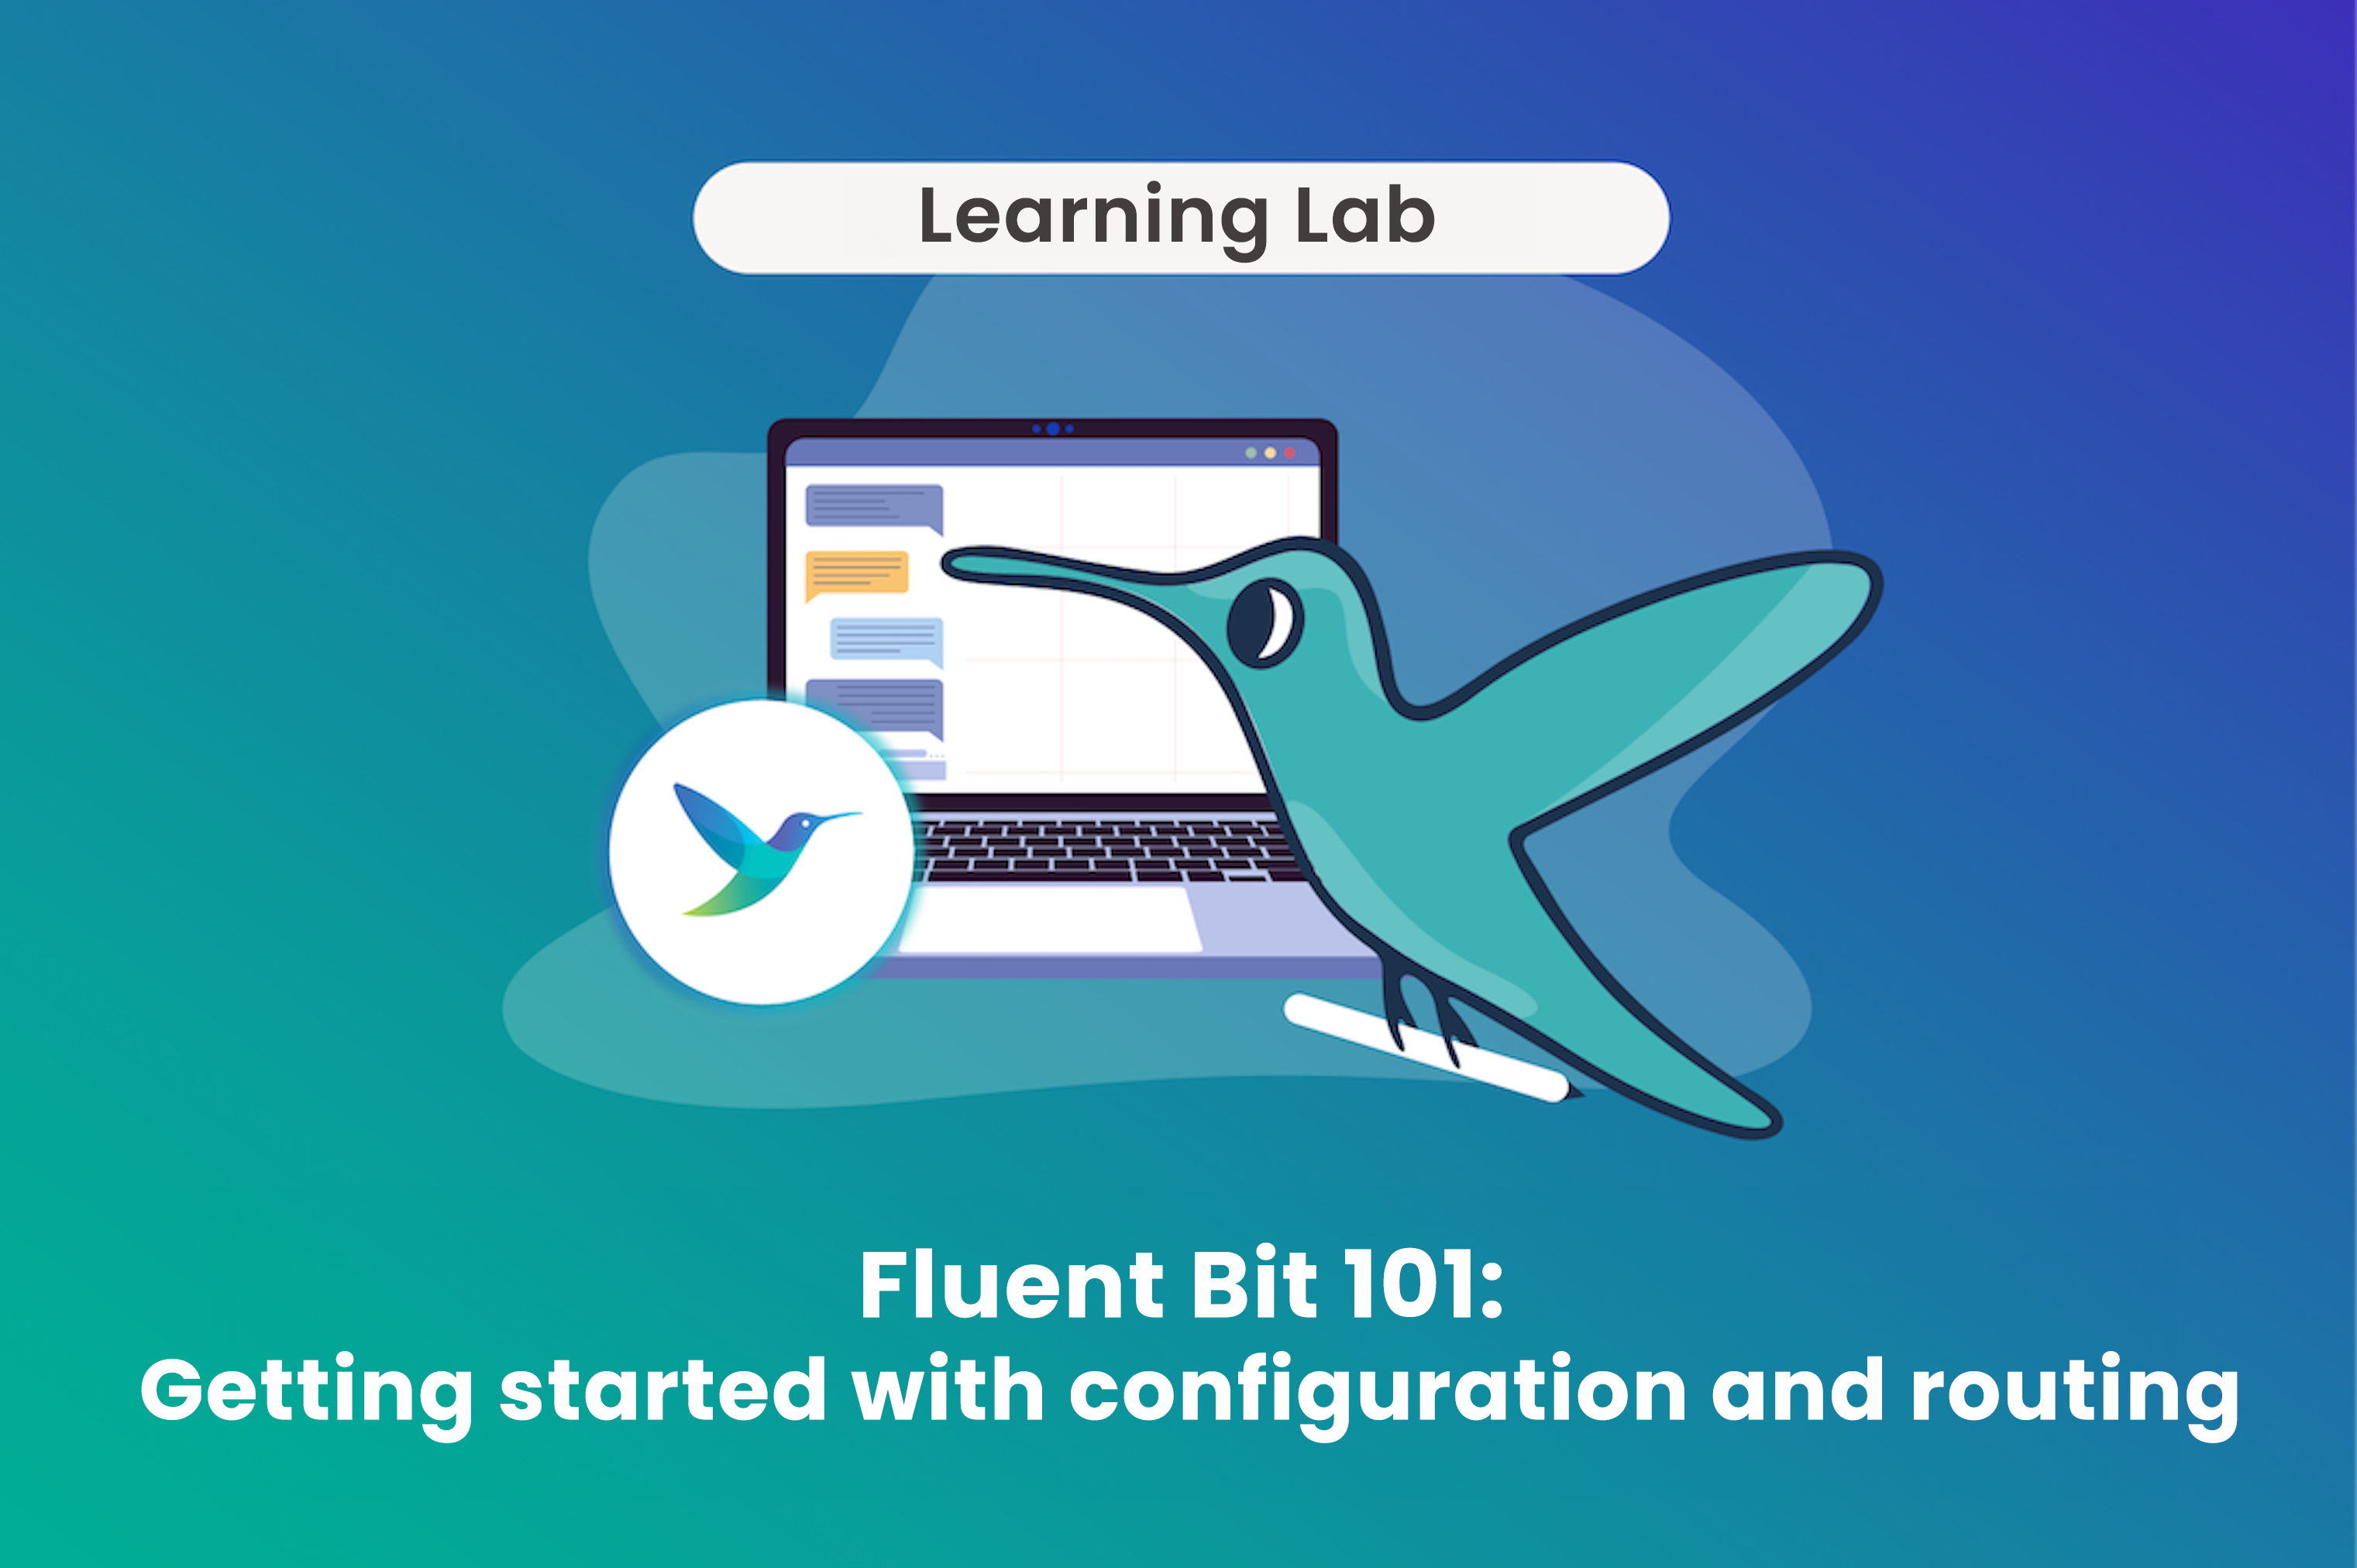 Fluent Bit 101 Learning Lab